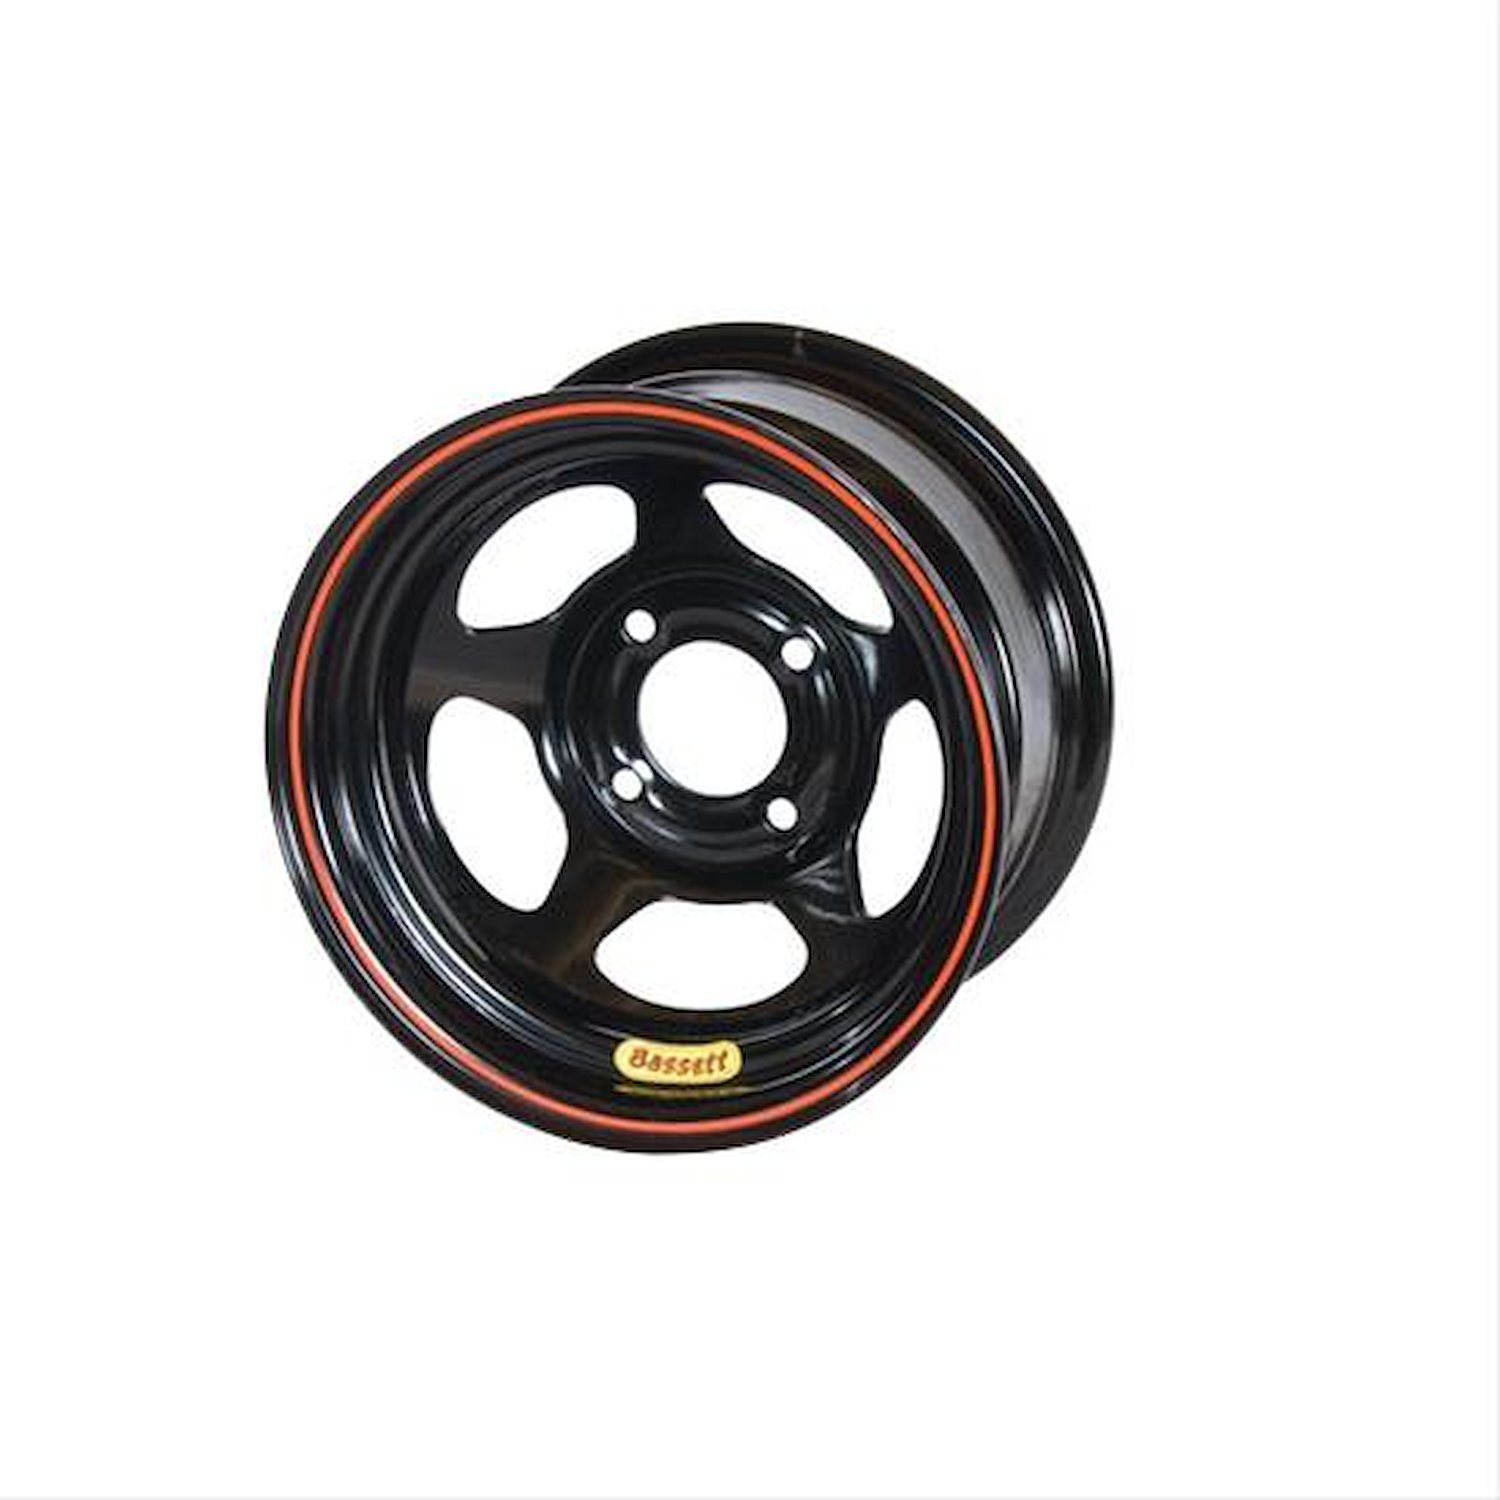 58AT3 Inertia Advantage Wheel Size: 15" x 8", Black